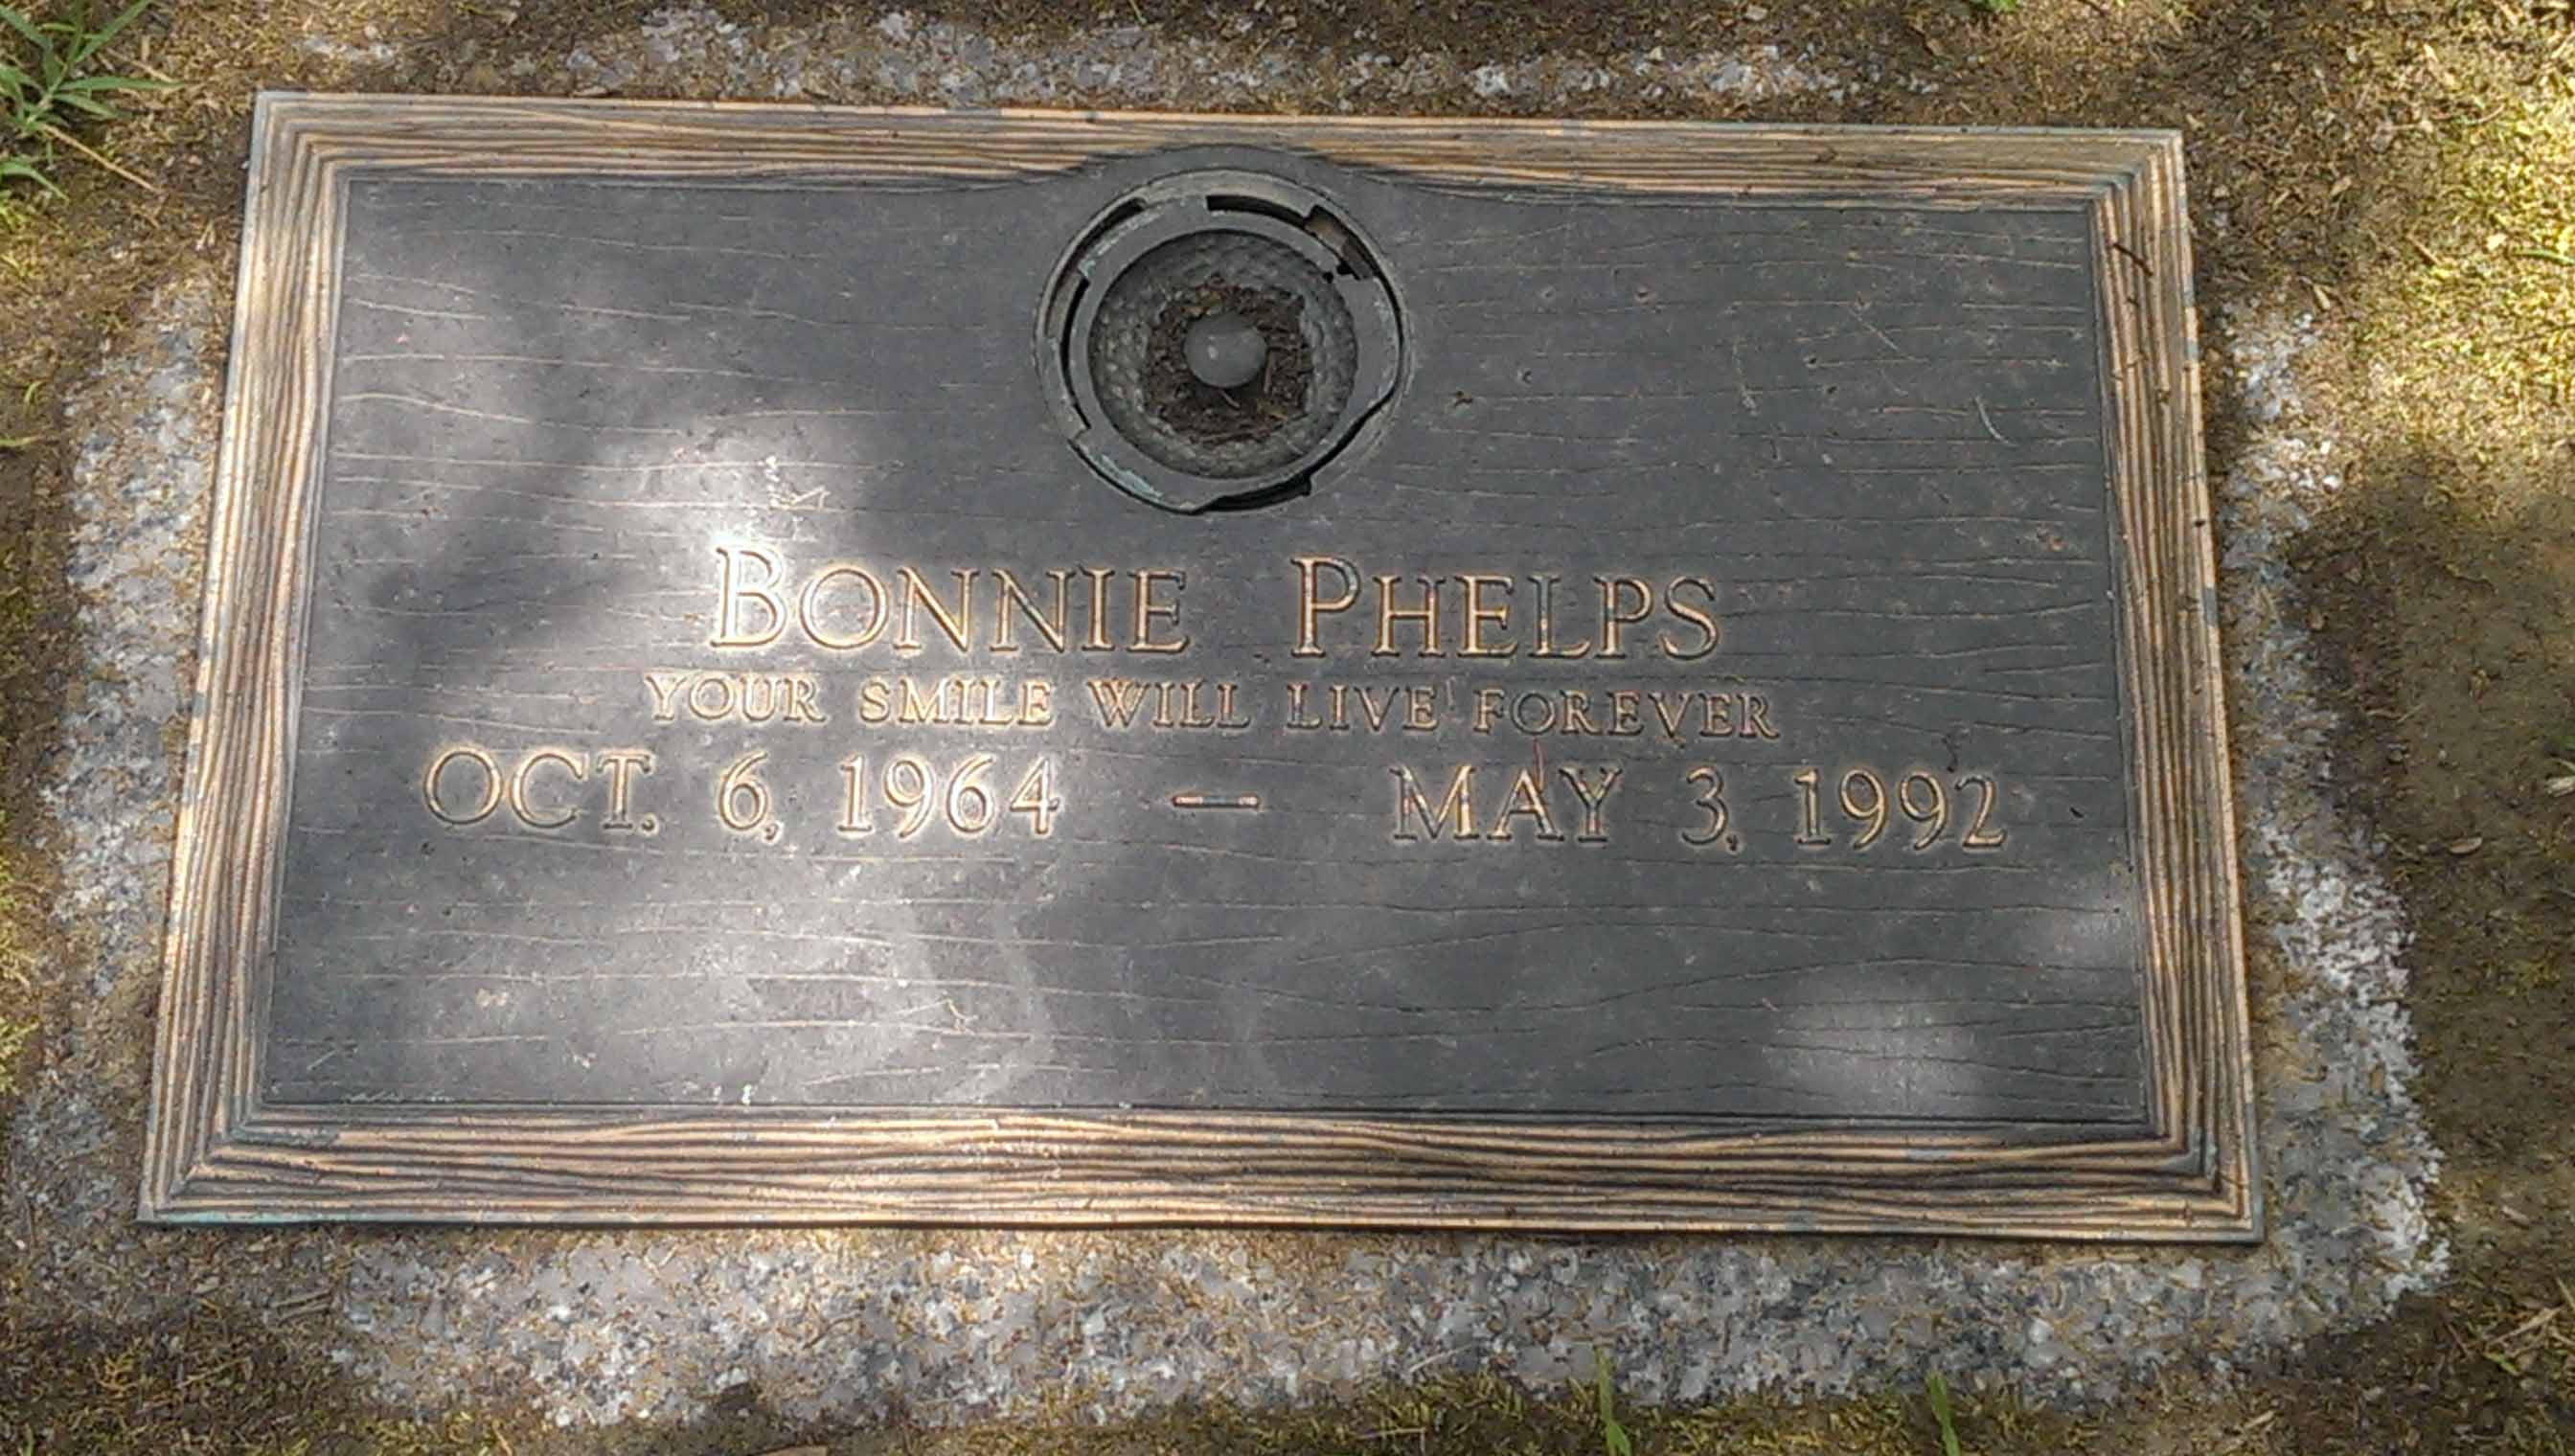 Bonnie Phelps Grave Marker, Aspen Hill, Maryland